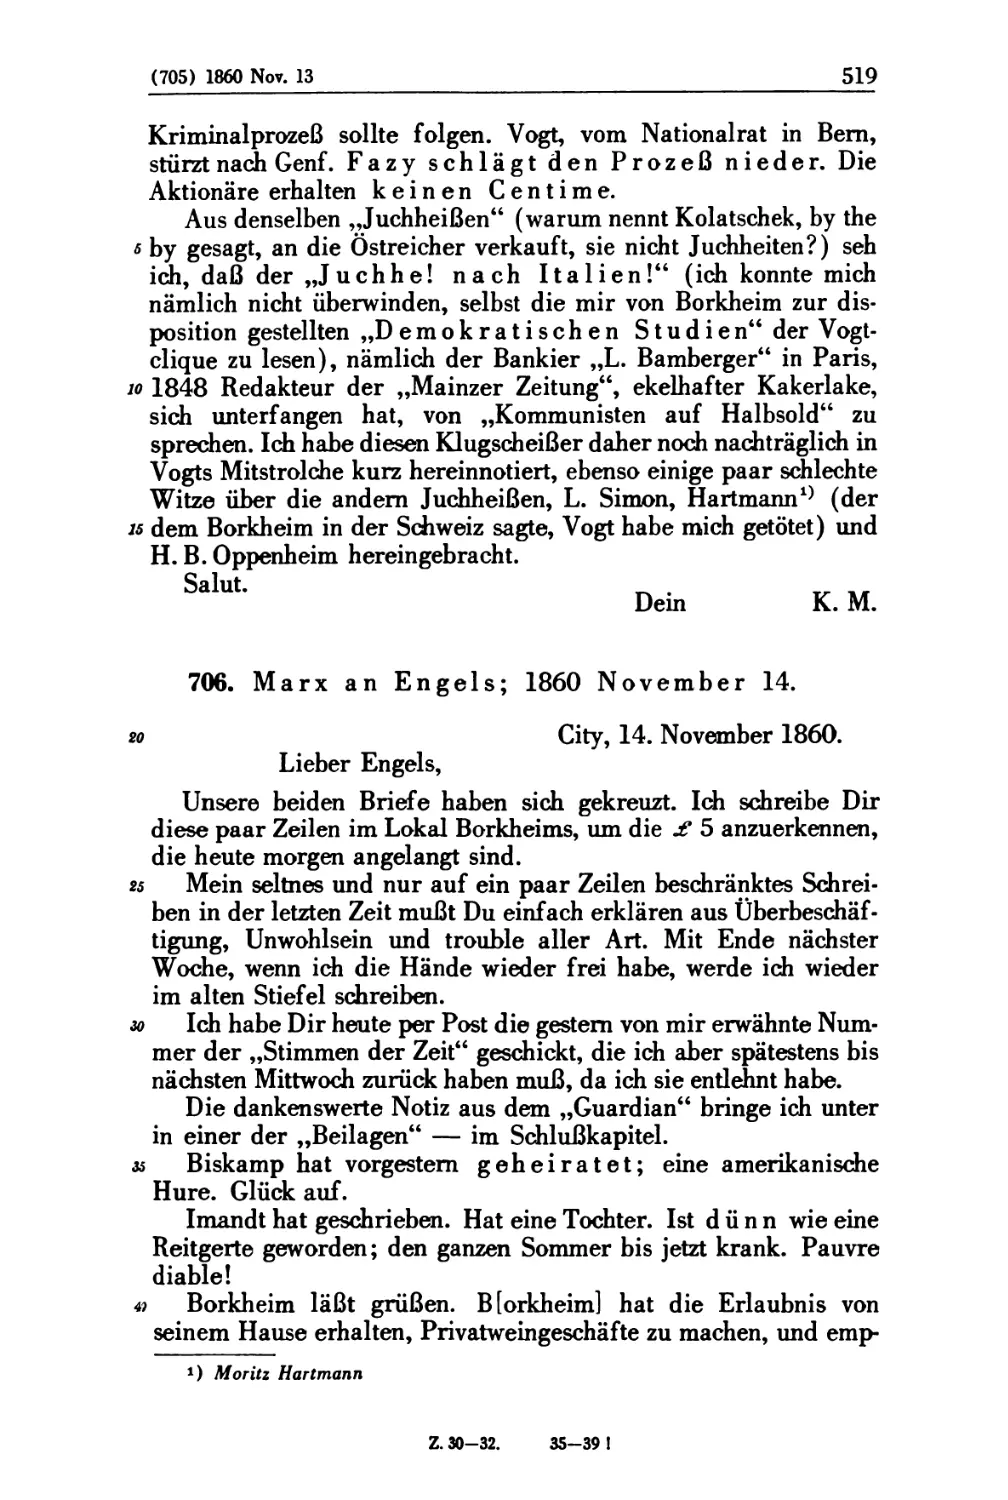 706. Marx an Engels; 1860 November 14